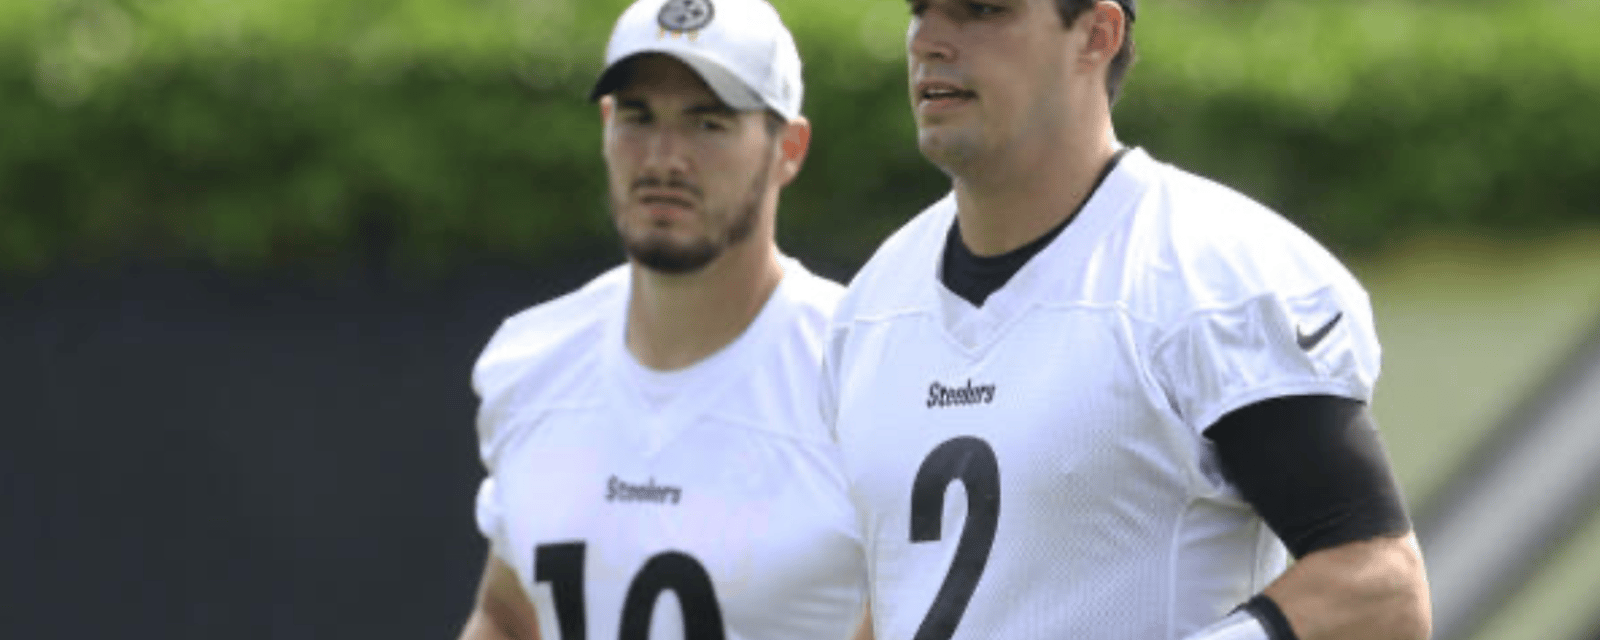 Mike Tomlin confirms Steelers starting QB vs. Bills